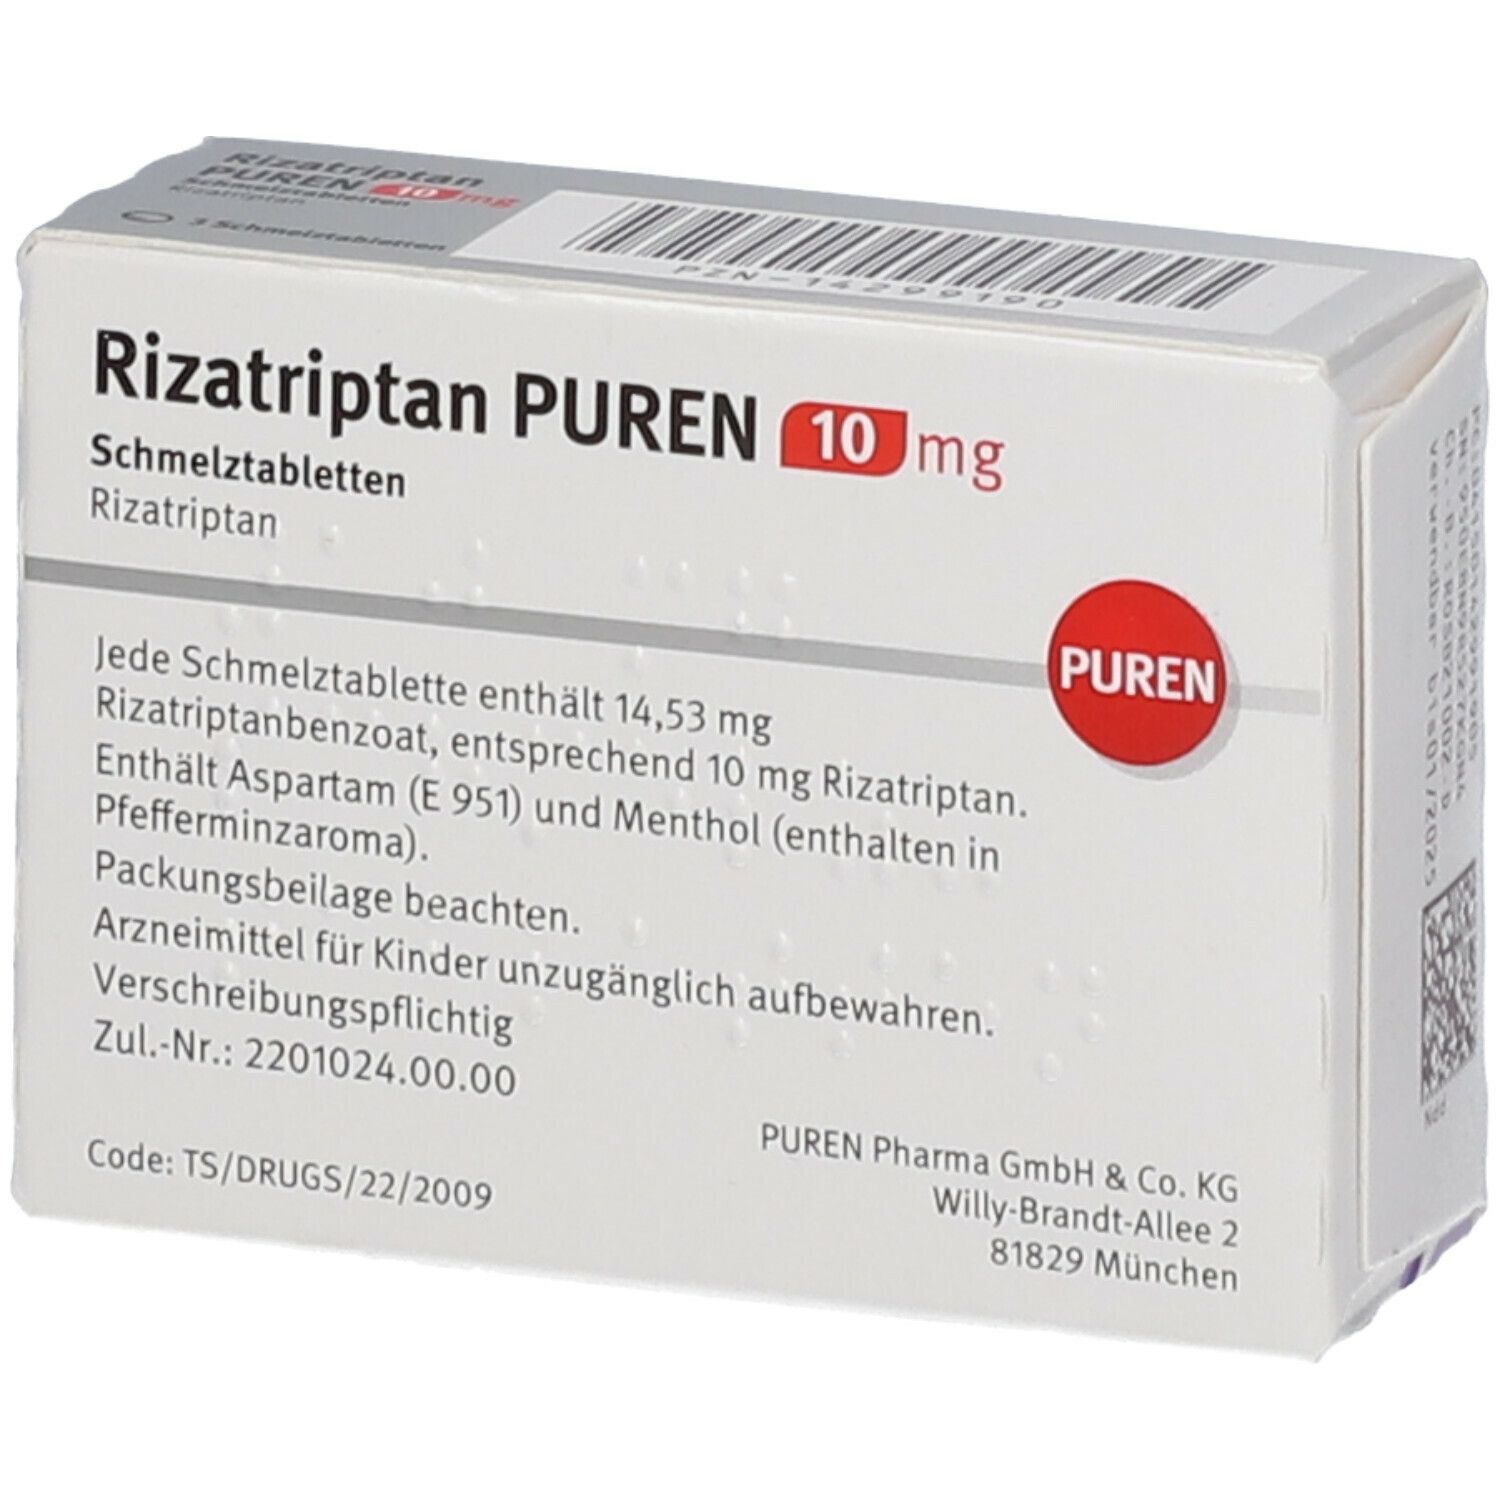 RIZATRIPTAN PUREN 10 mg Schmelztabletten